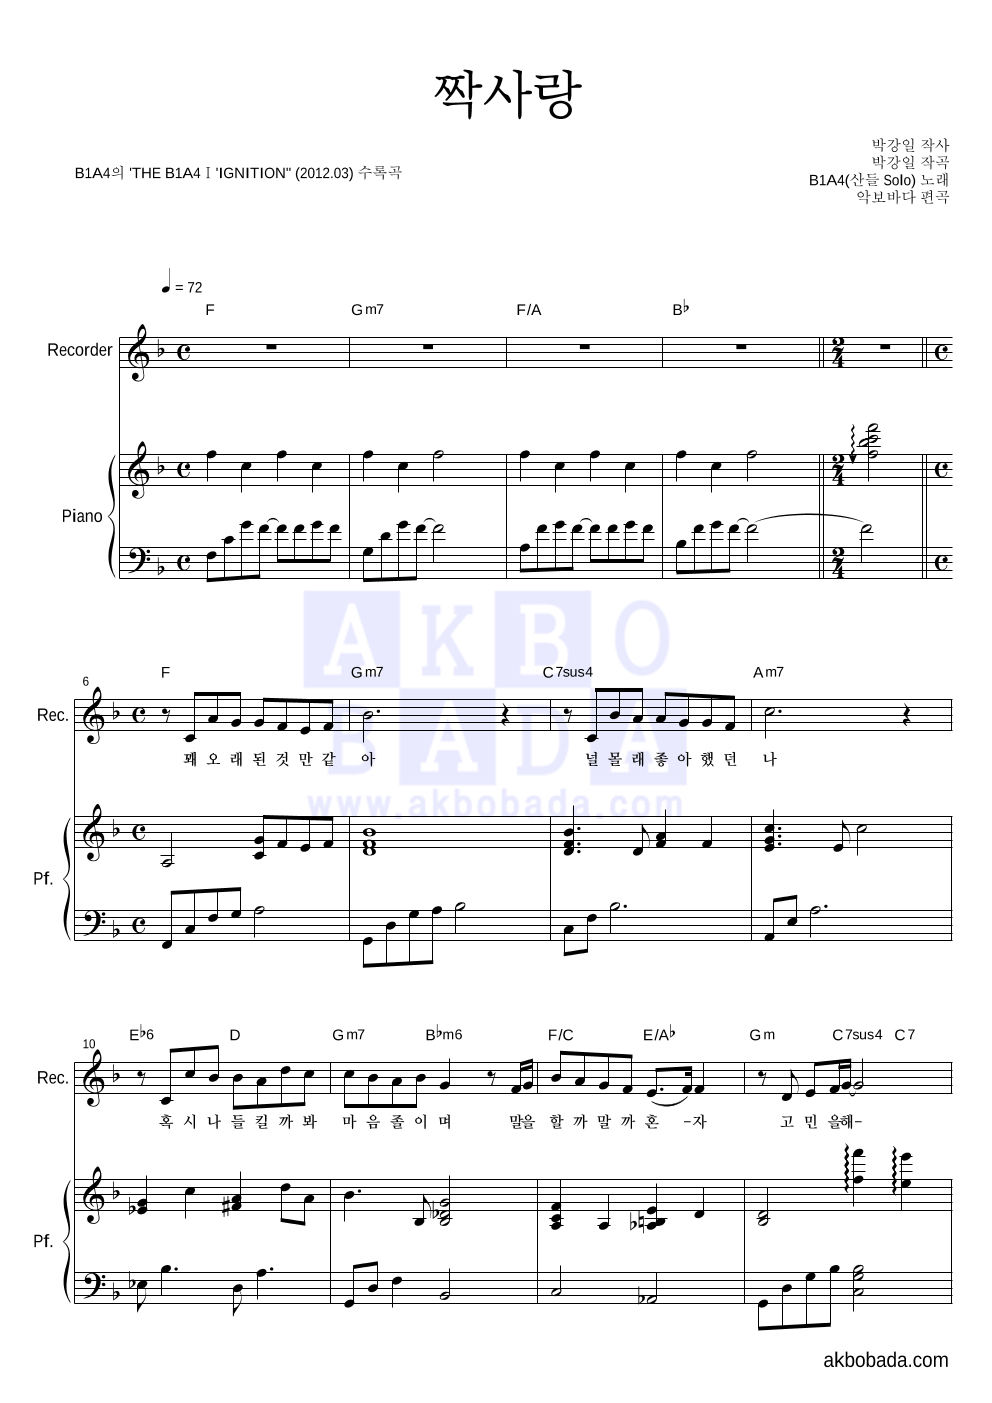 B1A4 - 짝사랑 (산들 Solo) 리코더&피아노 악보 